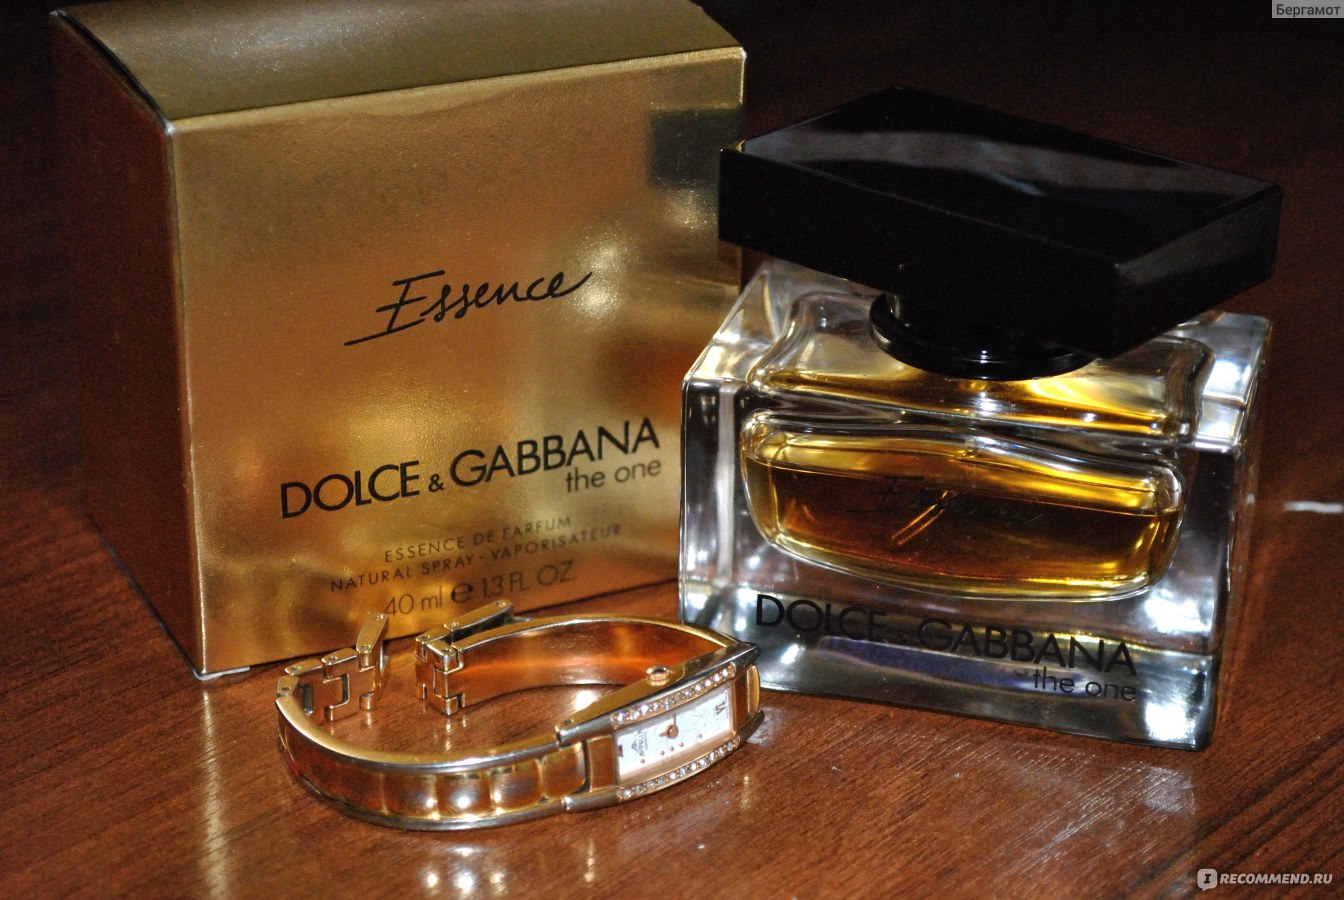 Дольче габбана ван отзывы. Дольче Габбана Ван Голд 100. Dolce Gabbana the one Essence. Dolce Gabbana parfumuri. Упаковка Дольче Габбана.